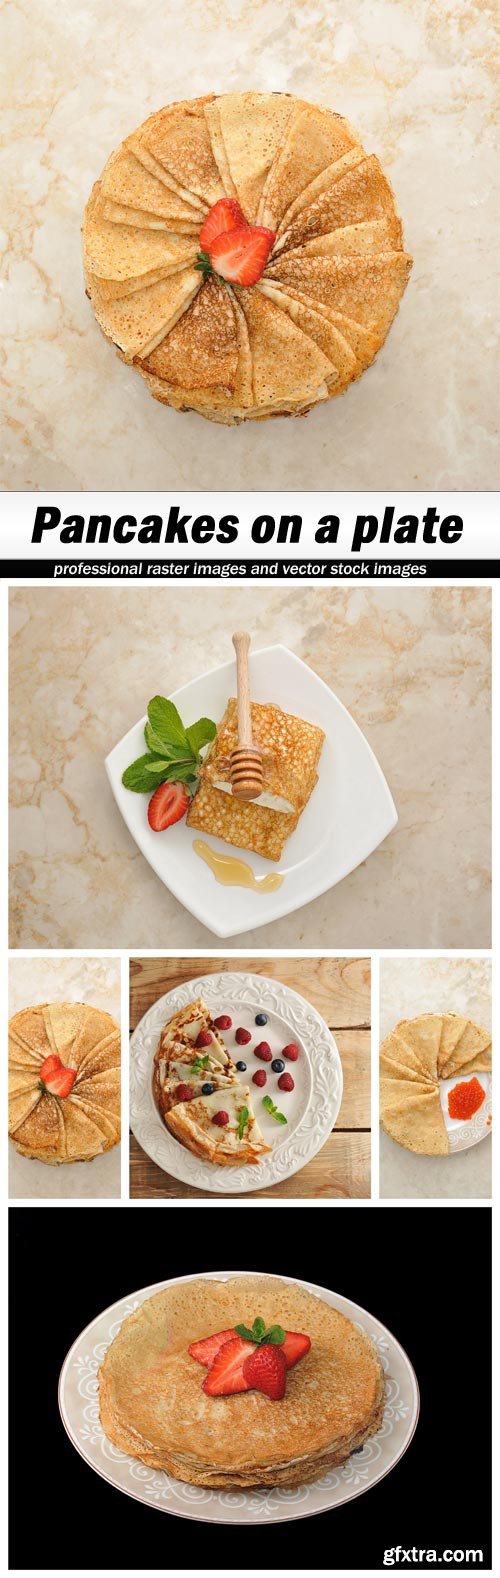 Pancakes on a plate - 5 UHQ JPEG